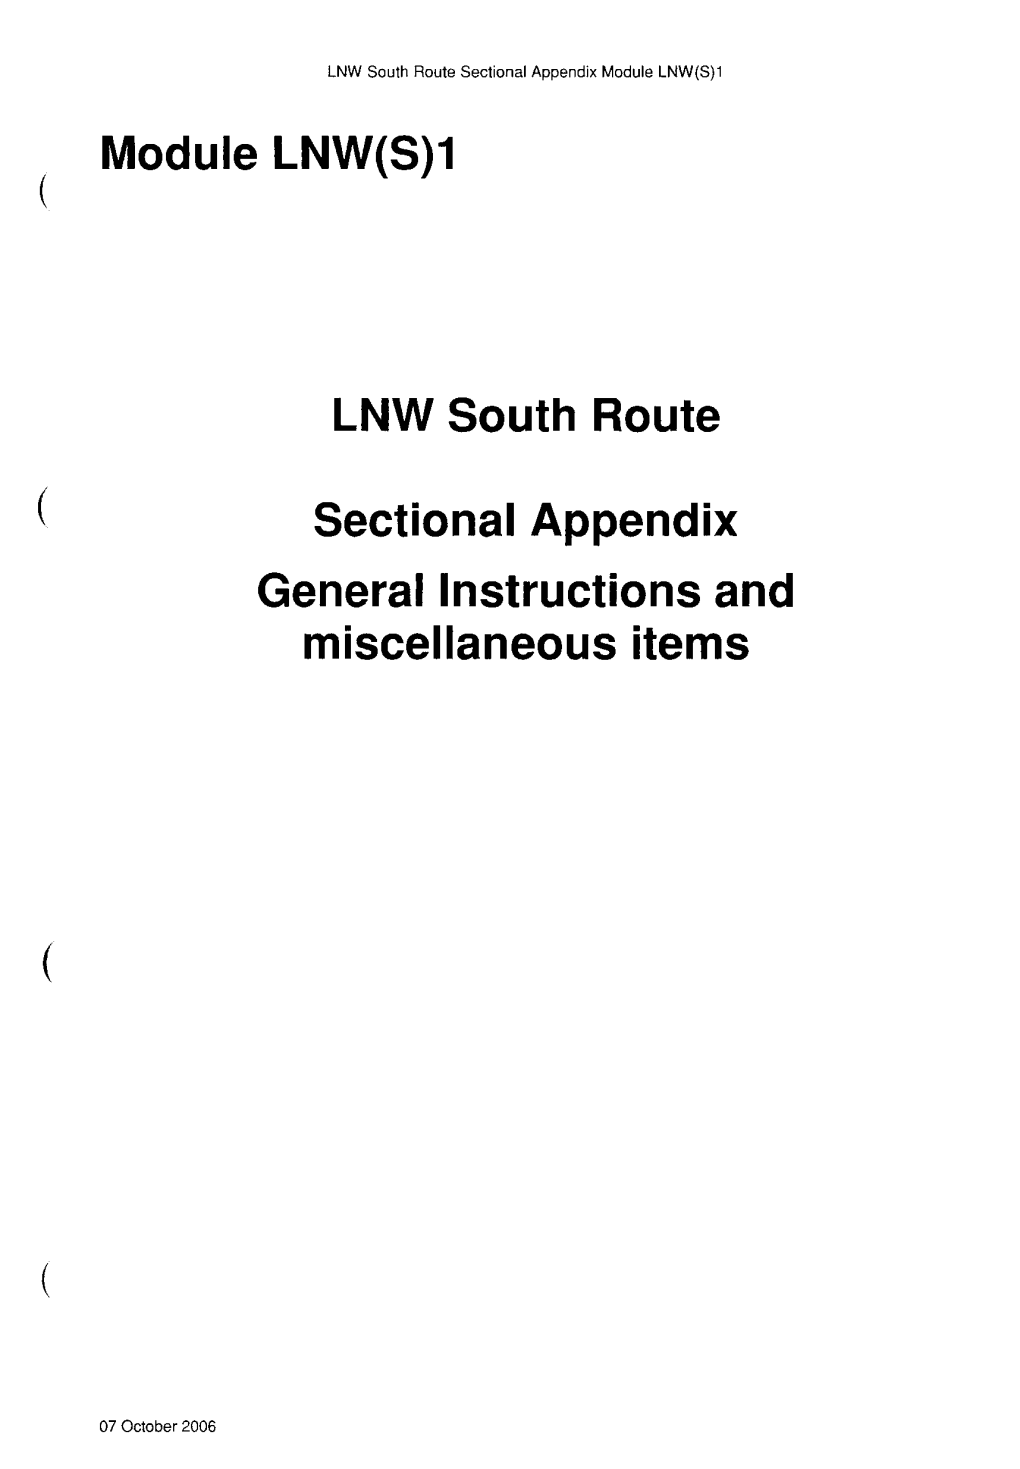 C Module LNW(S)1